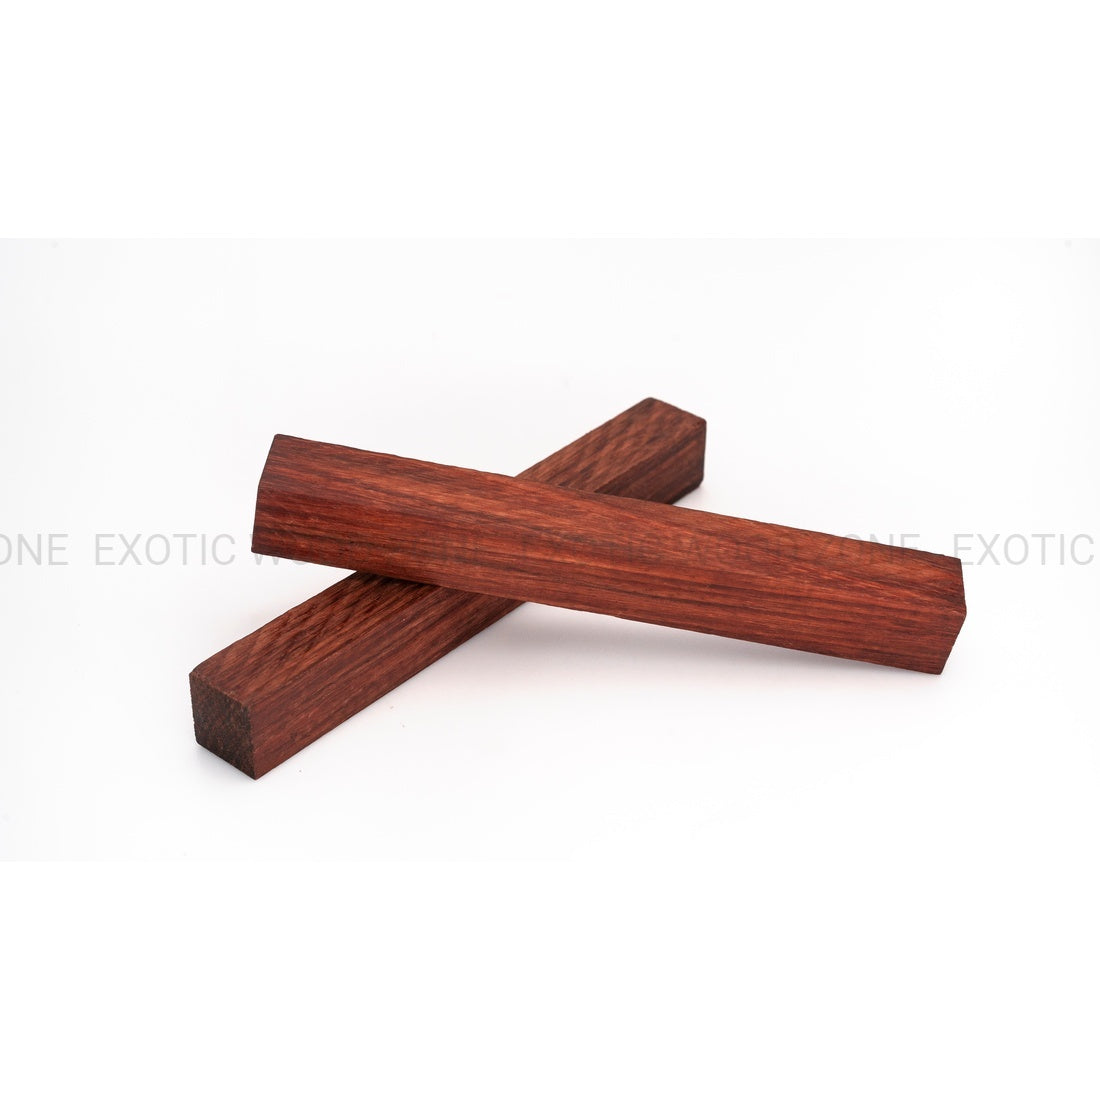 Granadillo Wood Pen Blanks - Exotic Wood Zone - Buy online Across USA 